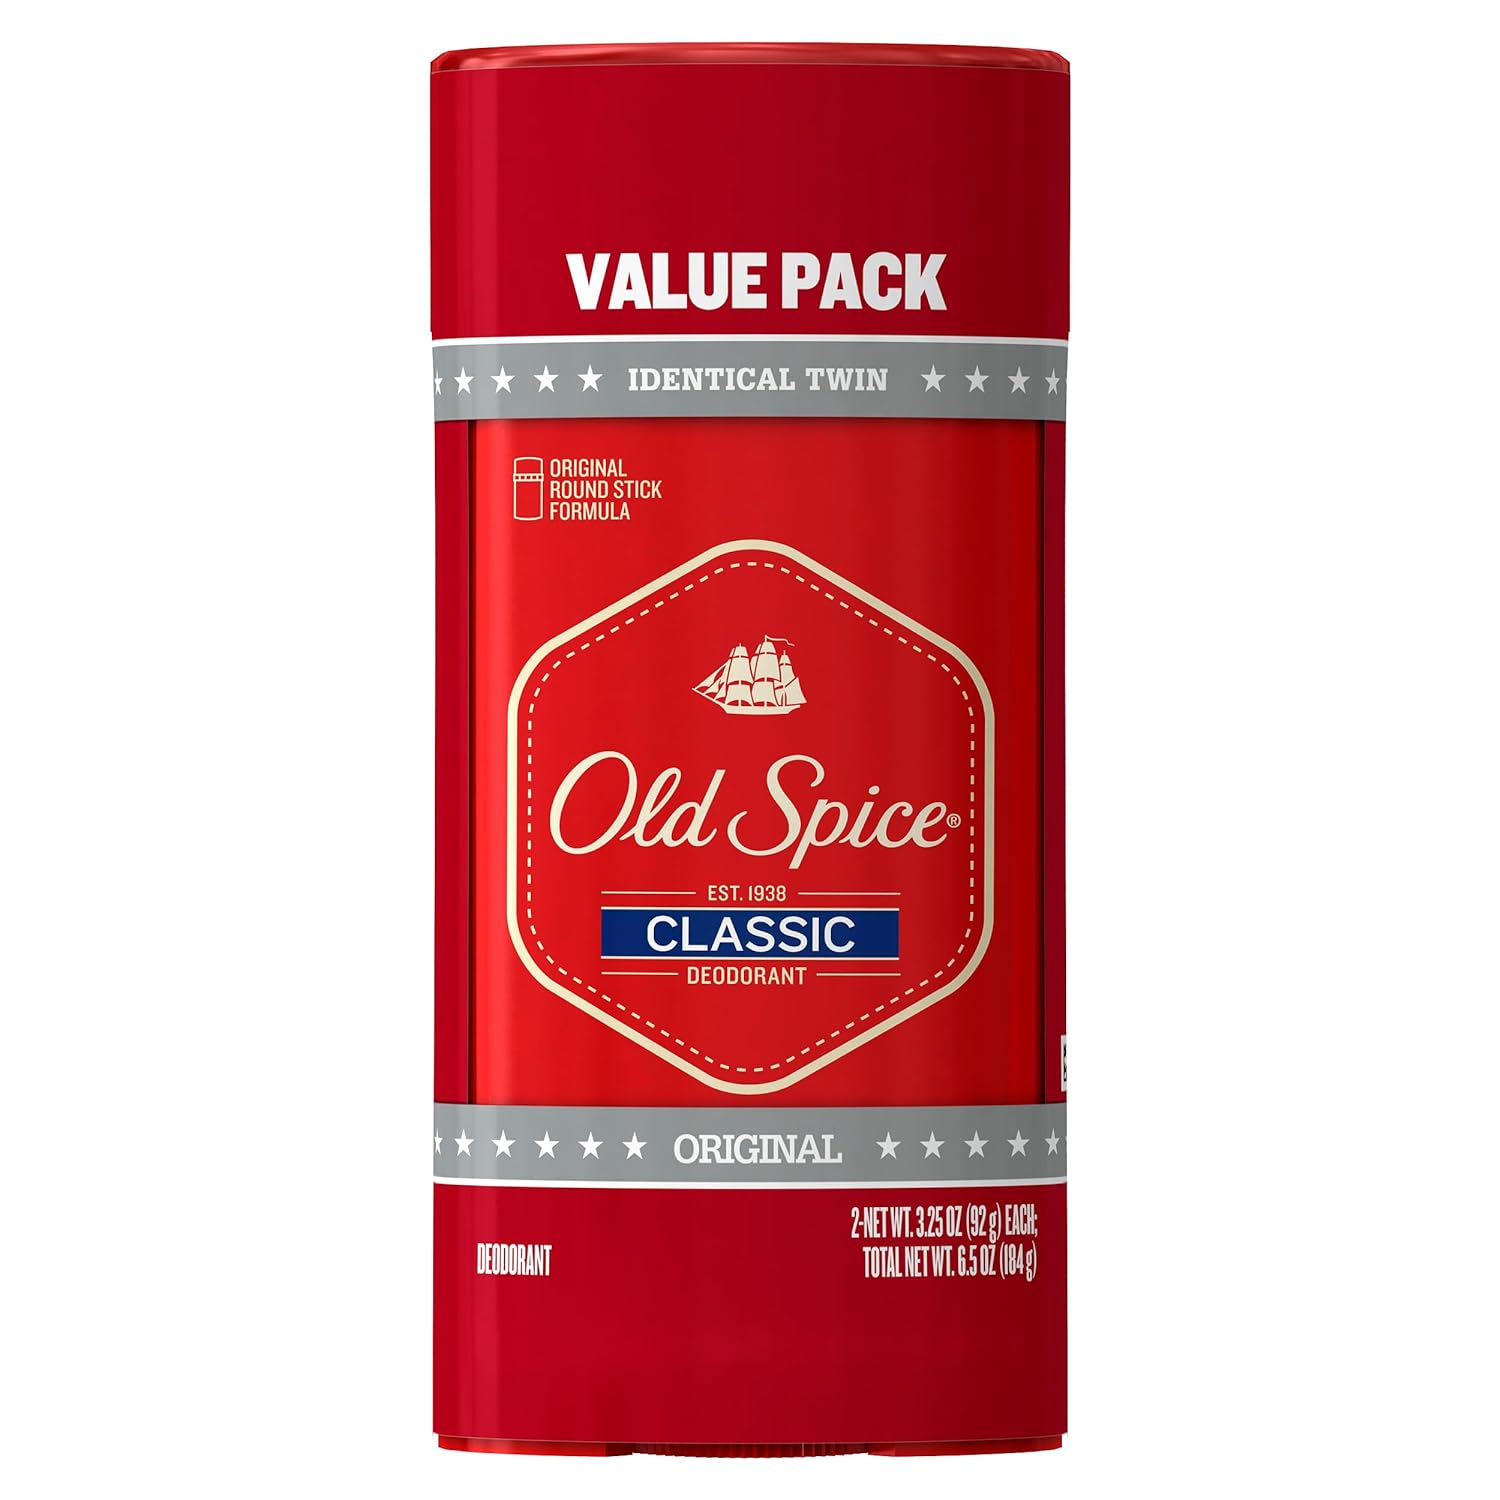 Old Spice Classic Original Scent Deodorant for Men, 3.25 oz, Pack of 2 - image 1 of 5